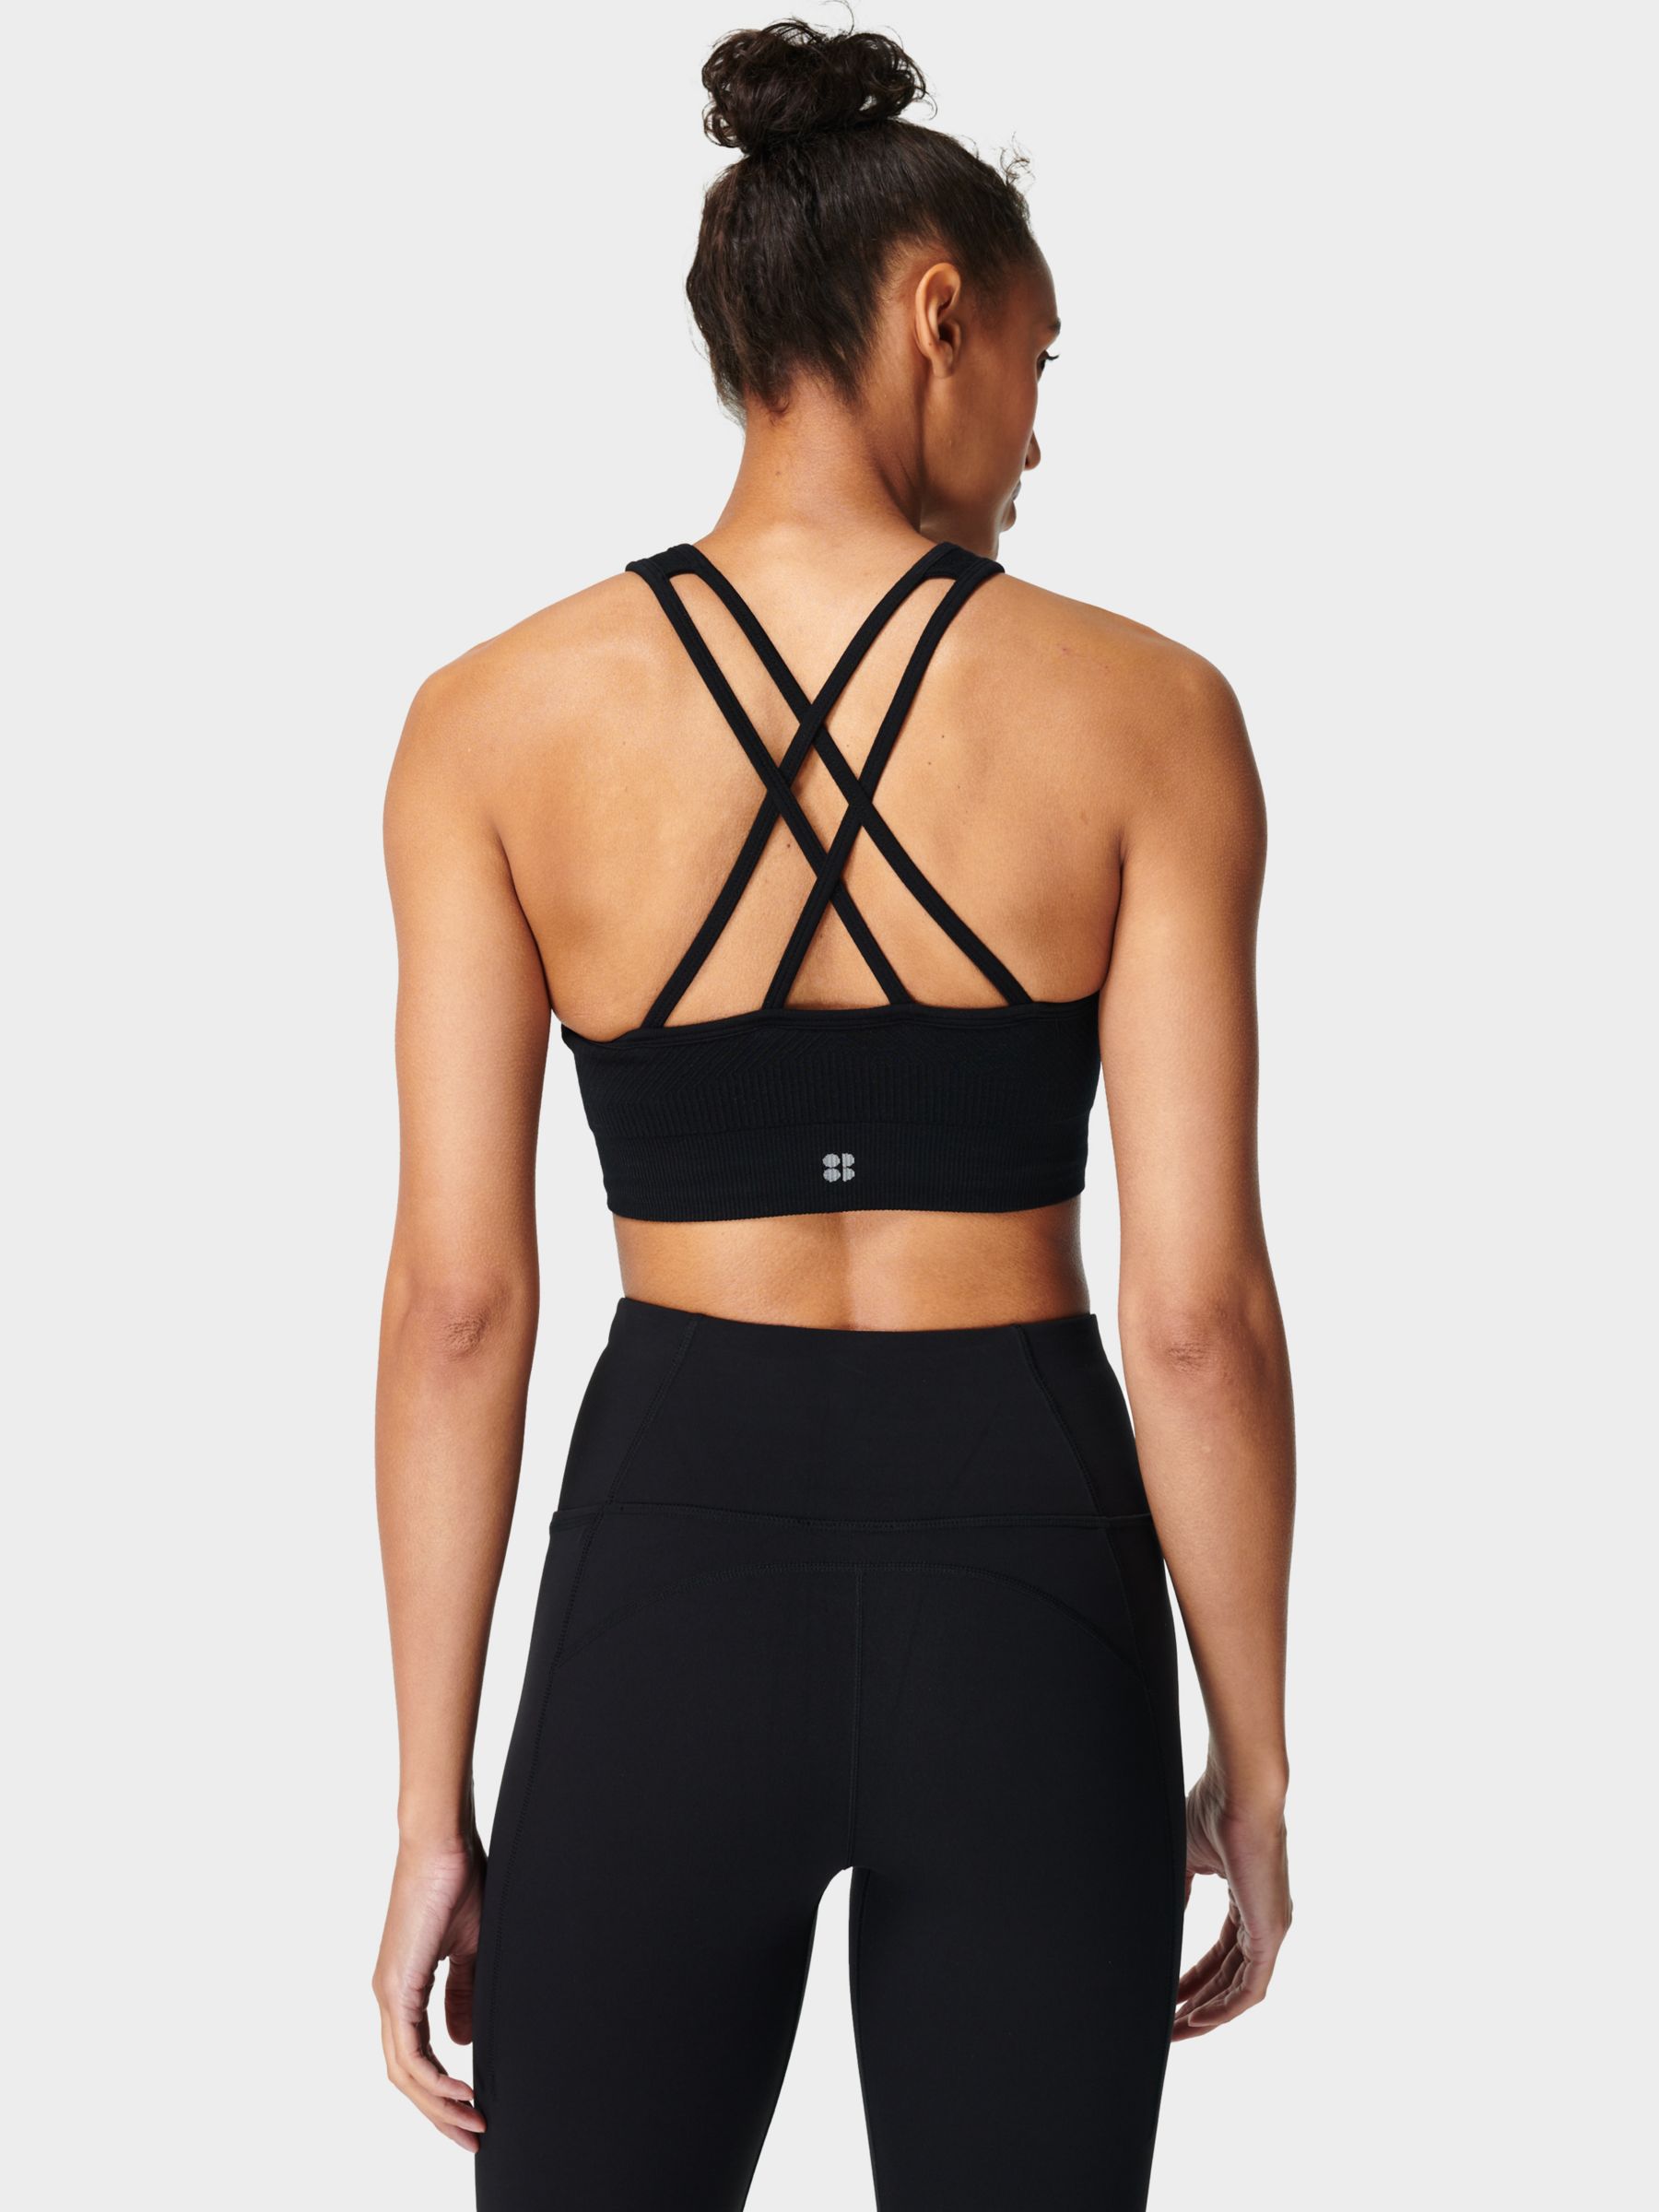 Sports Bra Front Criss Cross With Chest Pad Women Yoga Wear Stylish Gym  Wear Peachjoy 